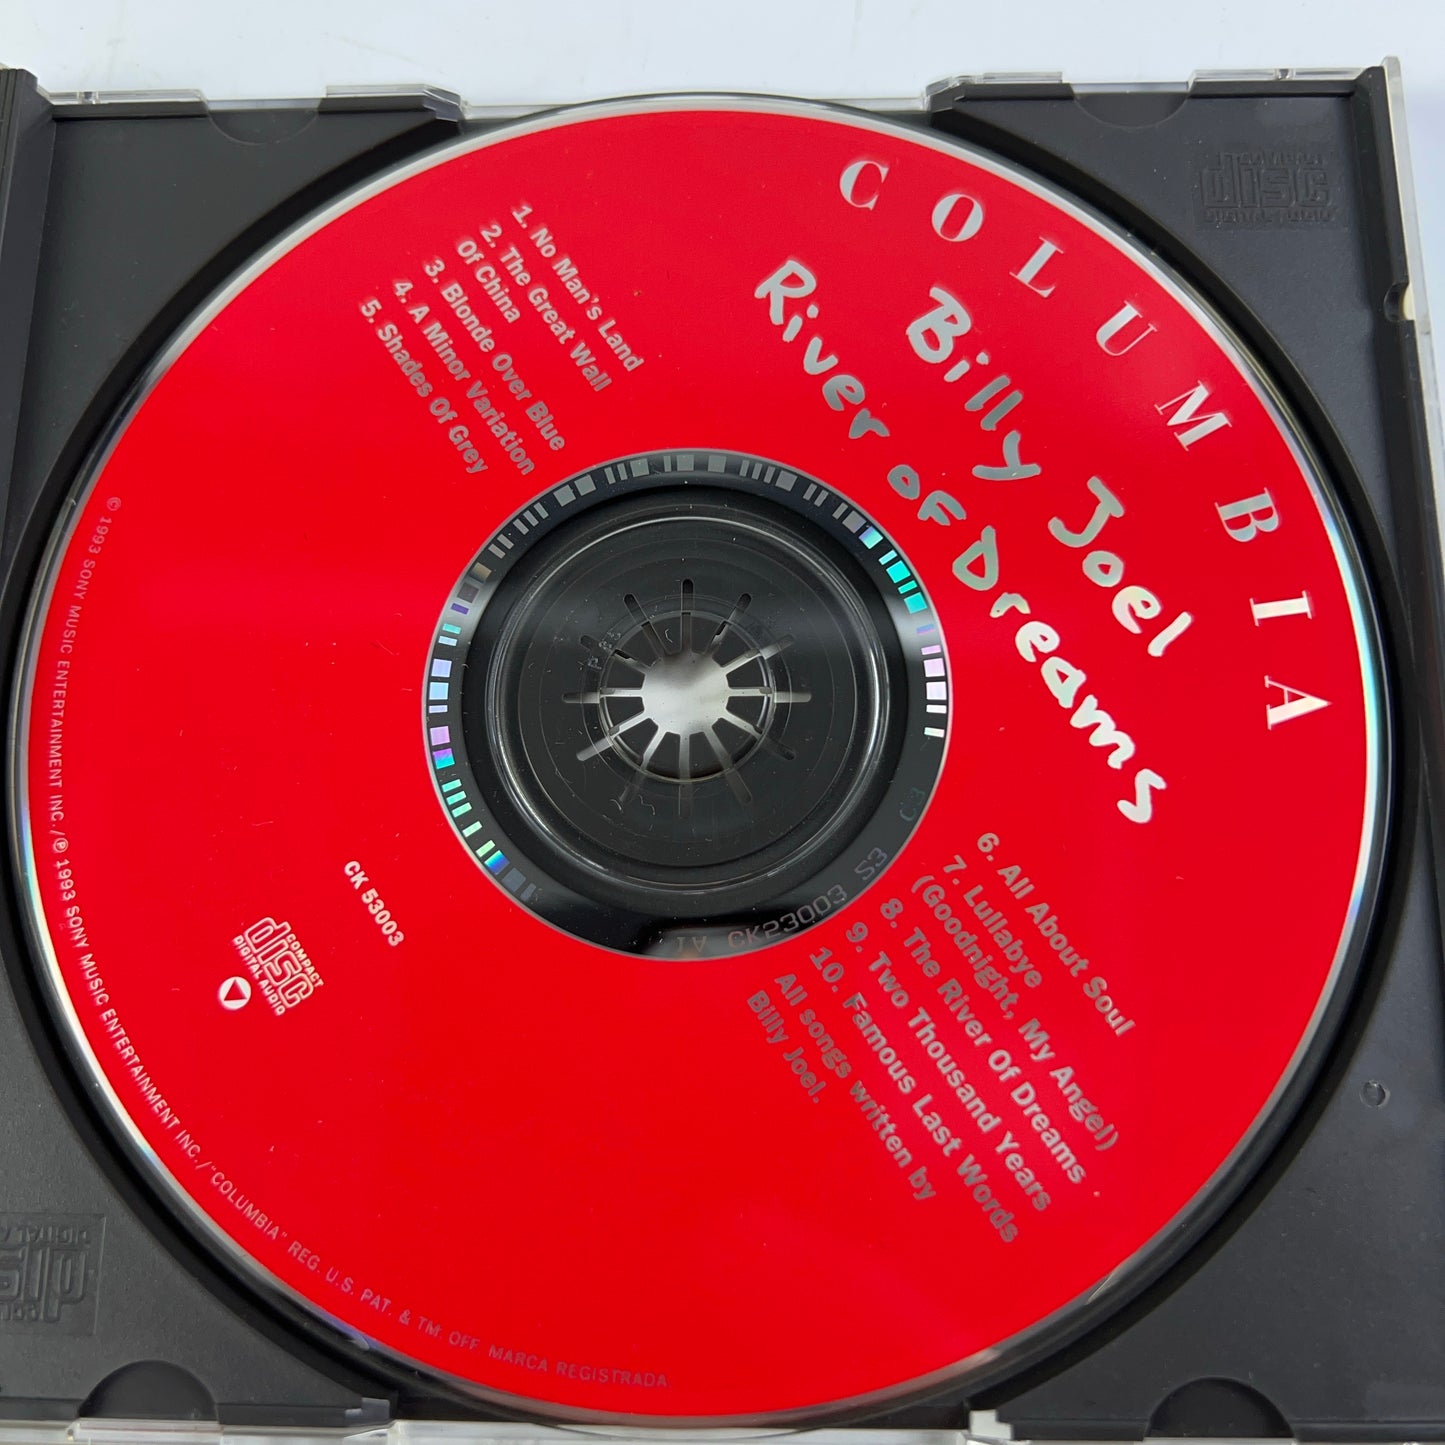 River of Dreams by Billy Joel (CD, Dec-2004, Sony Music Distribution (USA)